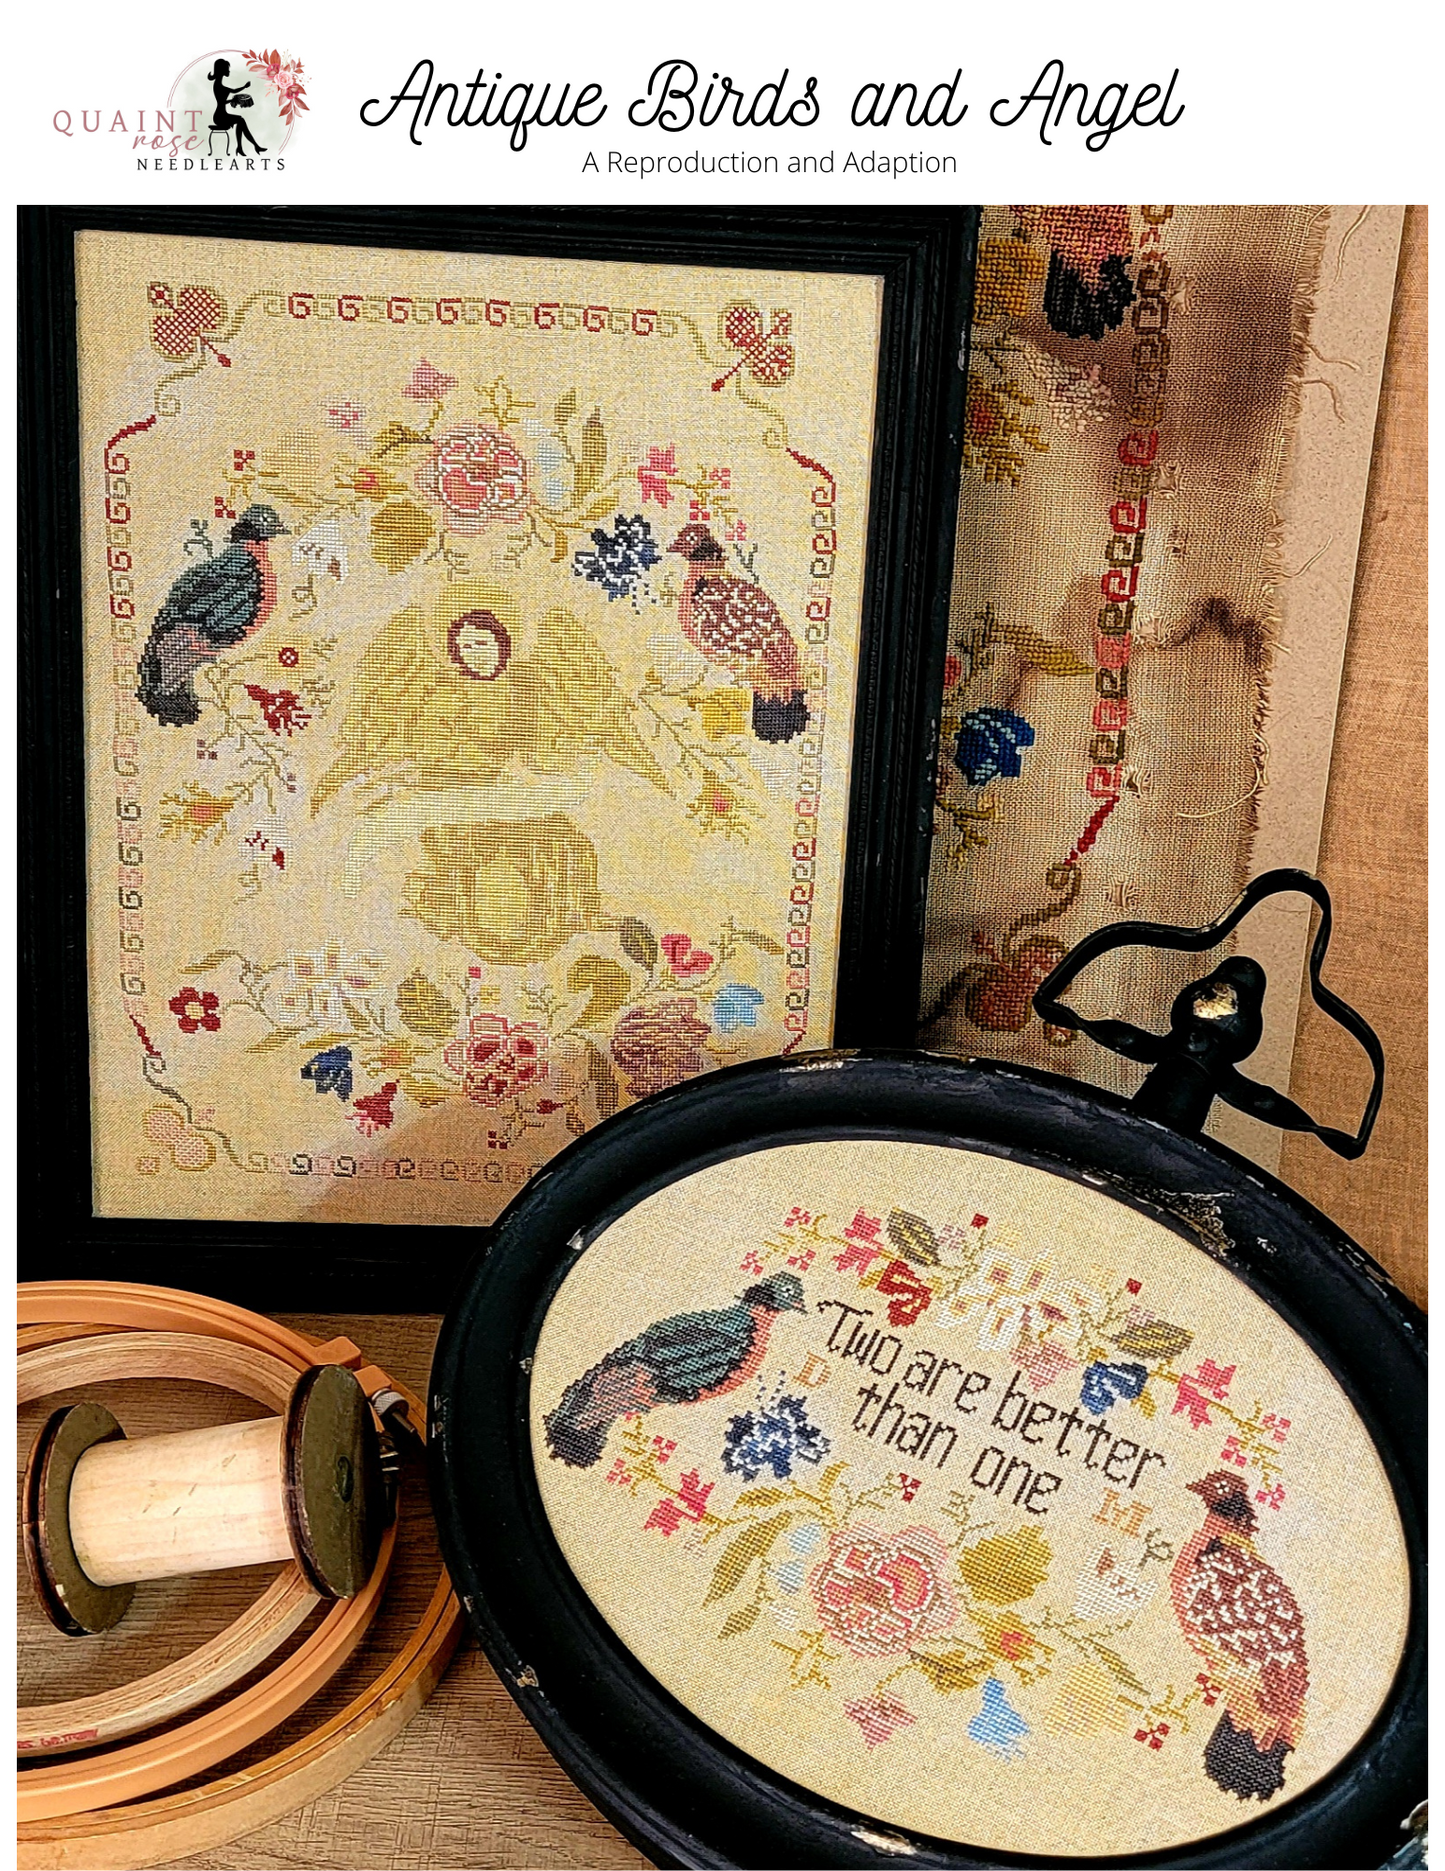 Antique Birds and Angel - Quaint Rose NeedleArts - Cross Stitch Patterns, Needlecraft Patterns, The Crafty Grimalkin - A Cross Stitch Store